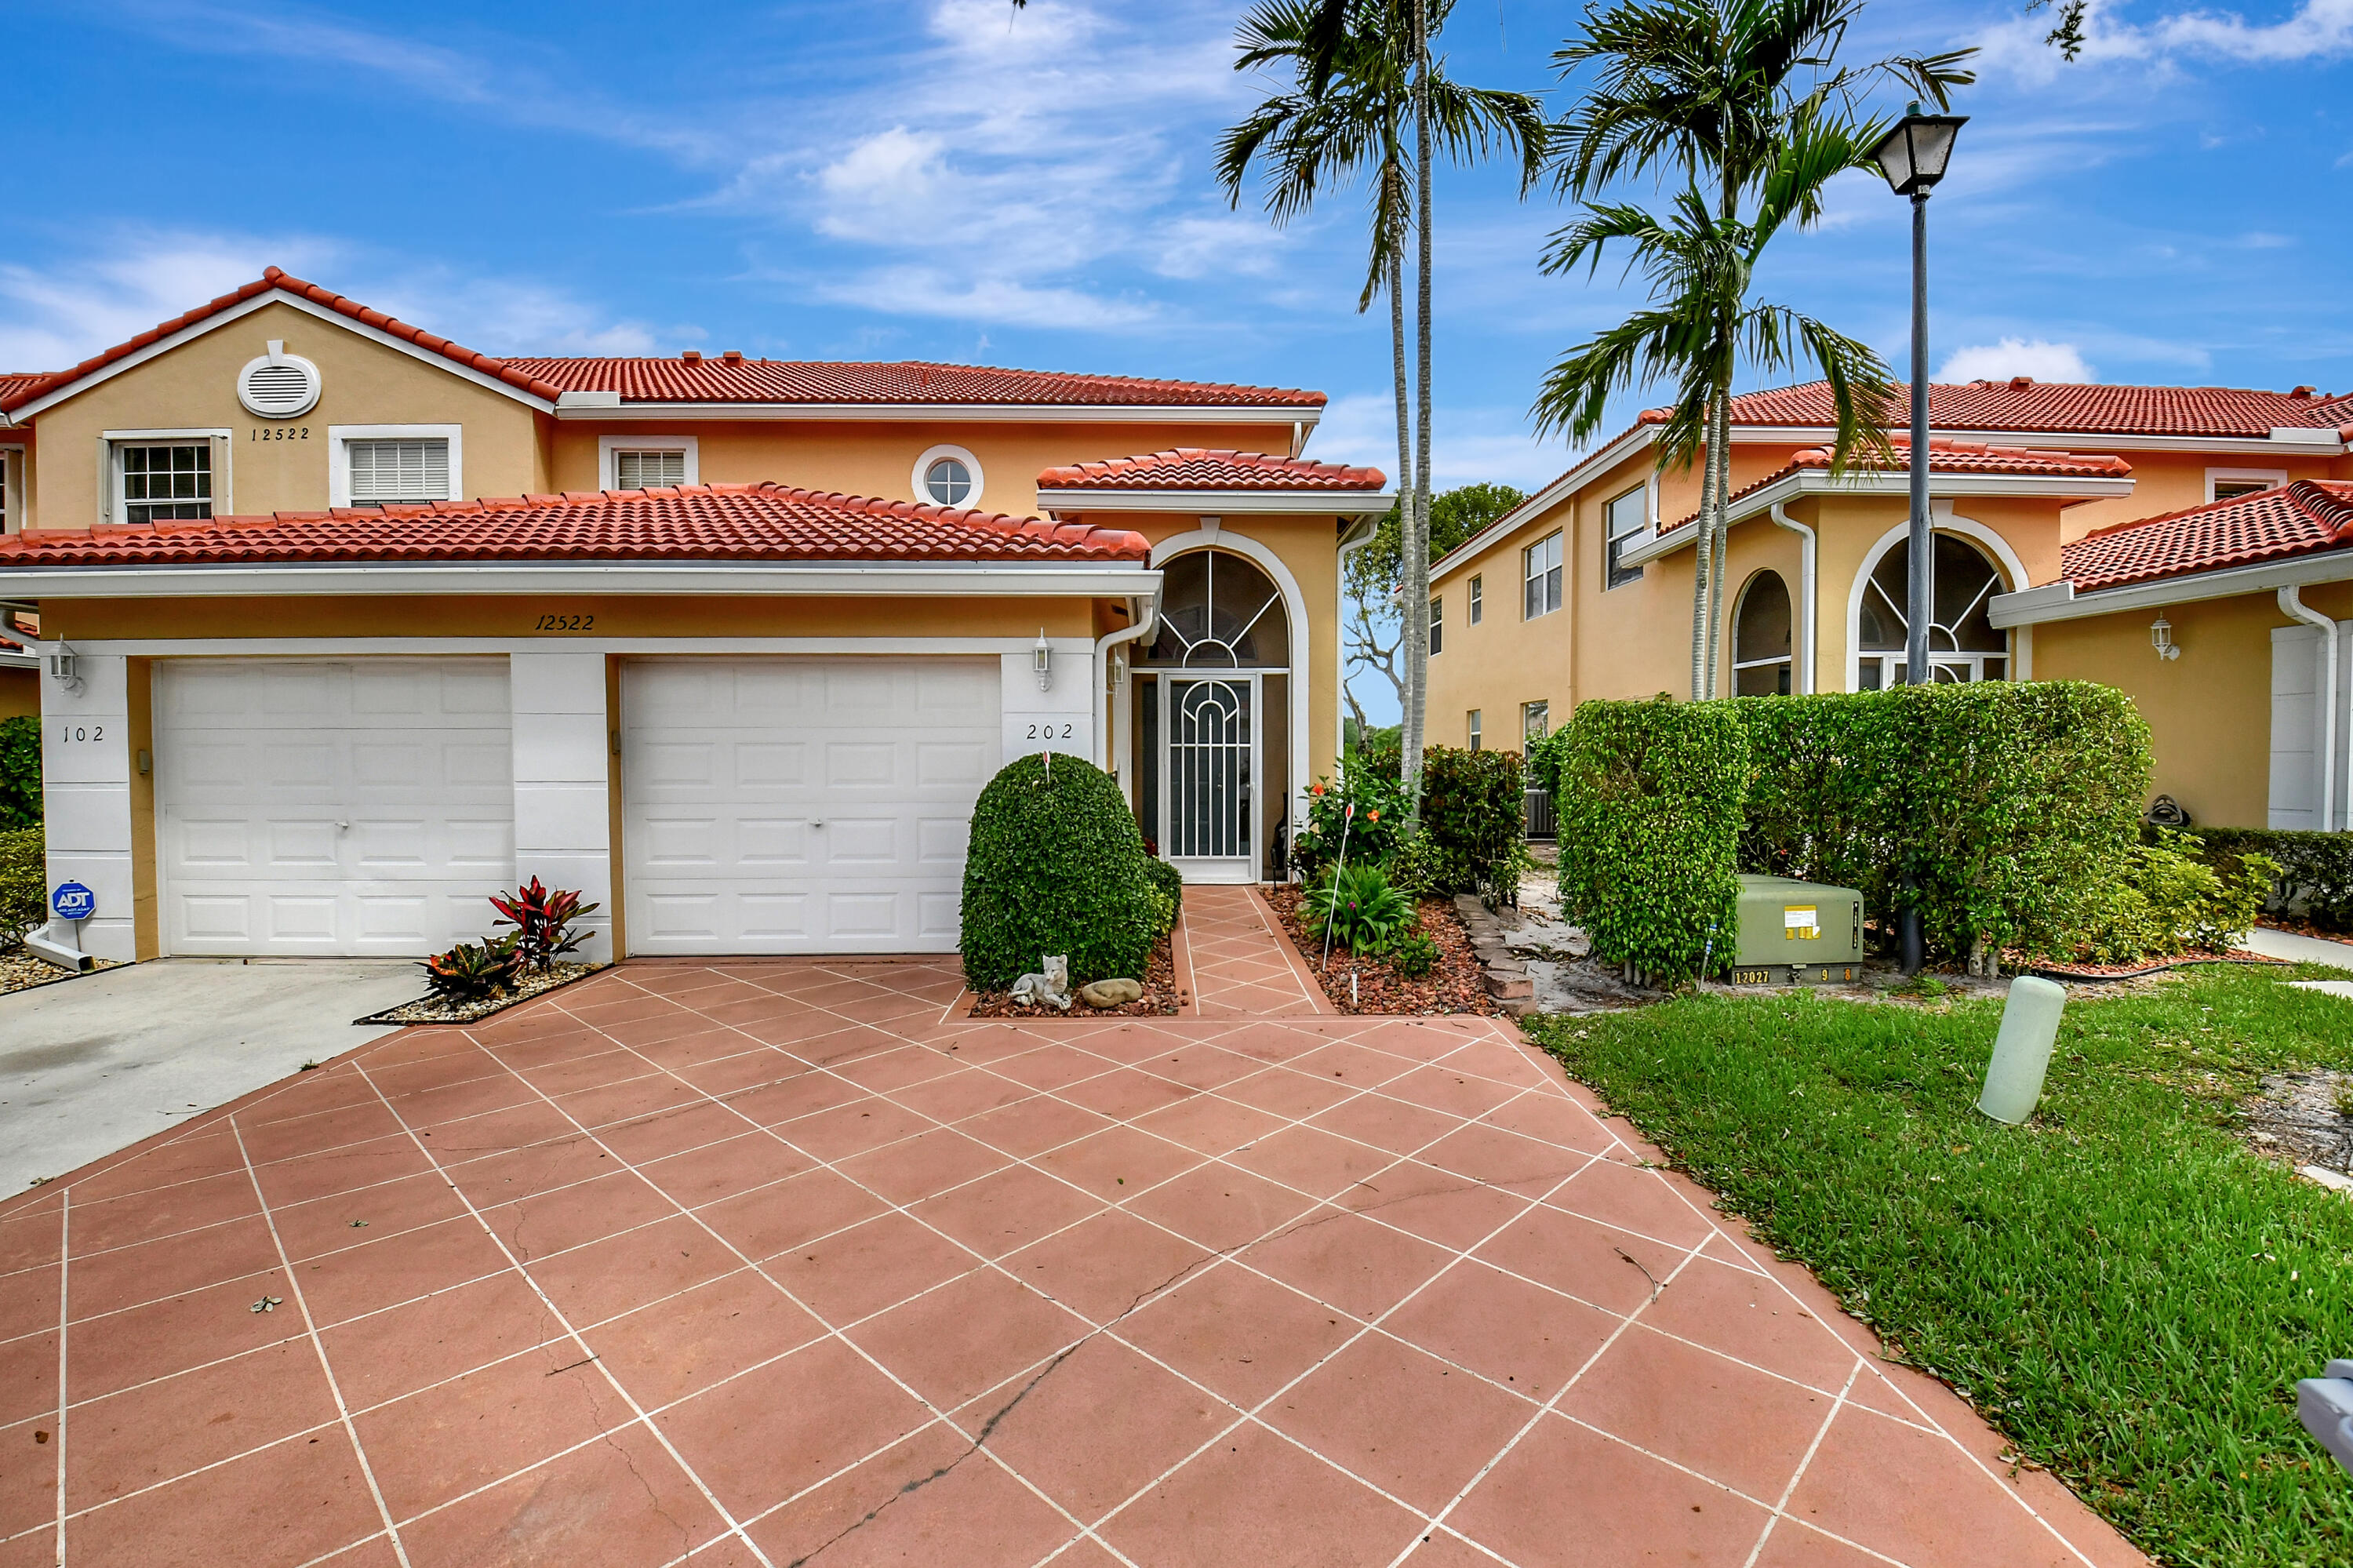 Property for Sale at 12522 Crystal Pointe Drive 202, Boynton Beach, Palm Beach County, Florida - Bedrooms: 3 
Bathrooms: 2  - $439,000